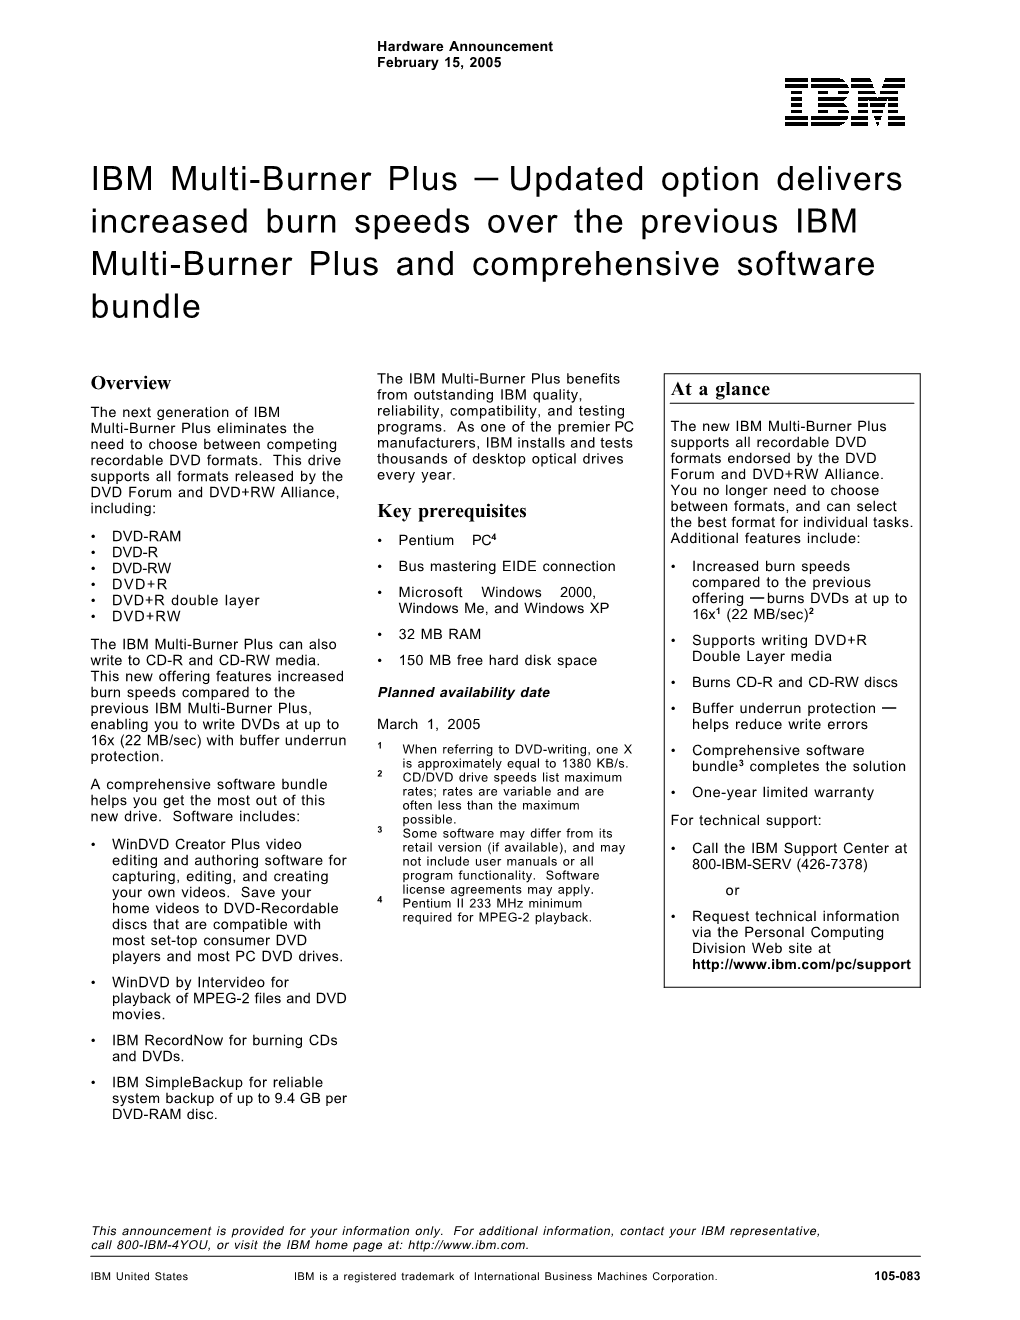 IBM Multi-Burner Plus — Updated Option Delivers Increased Burn Speeds Over the Previous IBM Multi-Burner Plus and Comprehensive Software Bundle